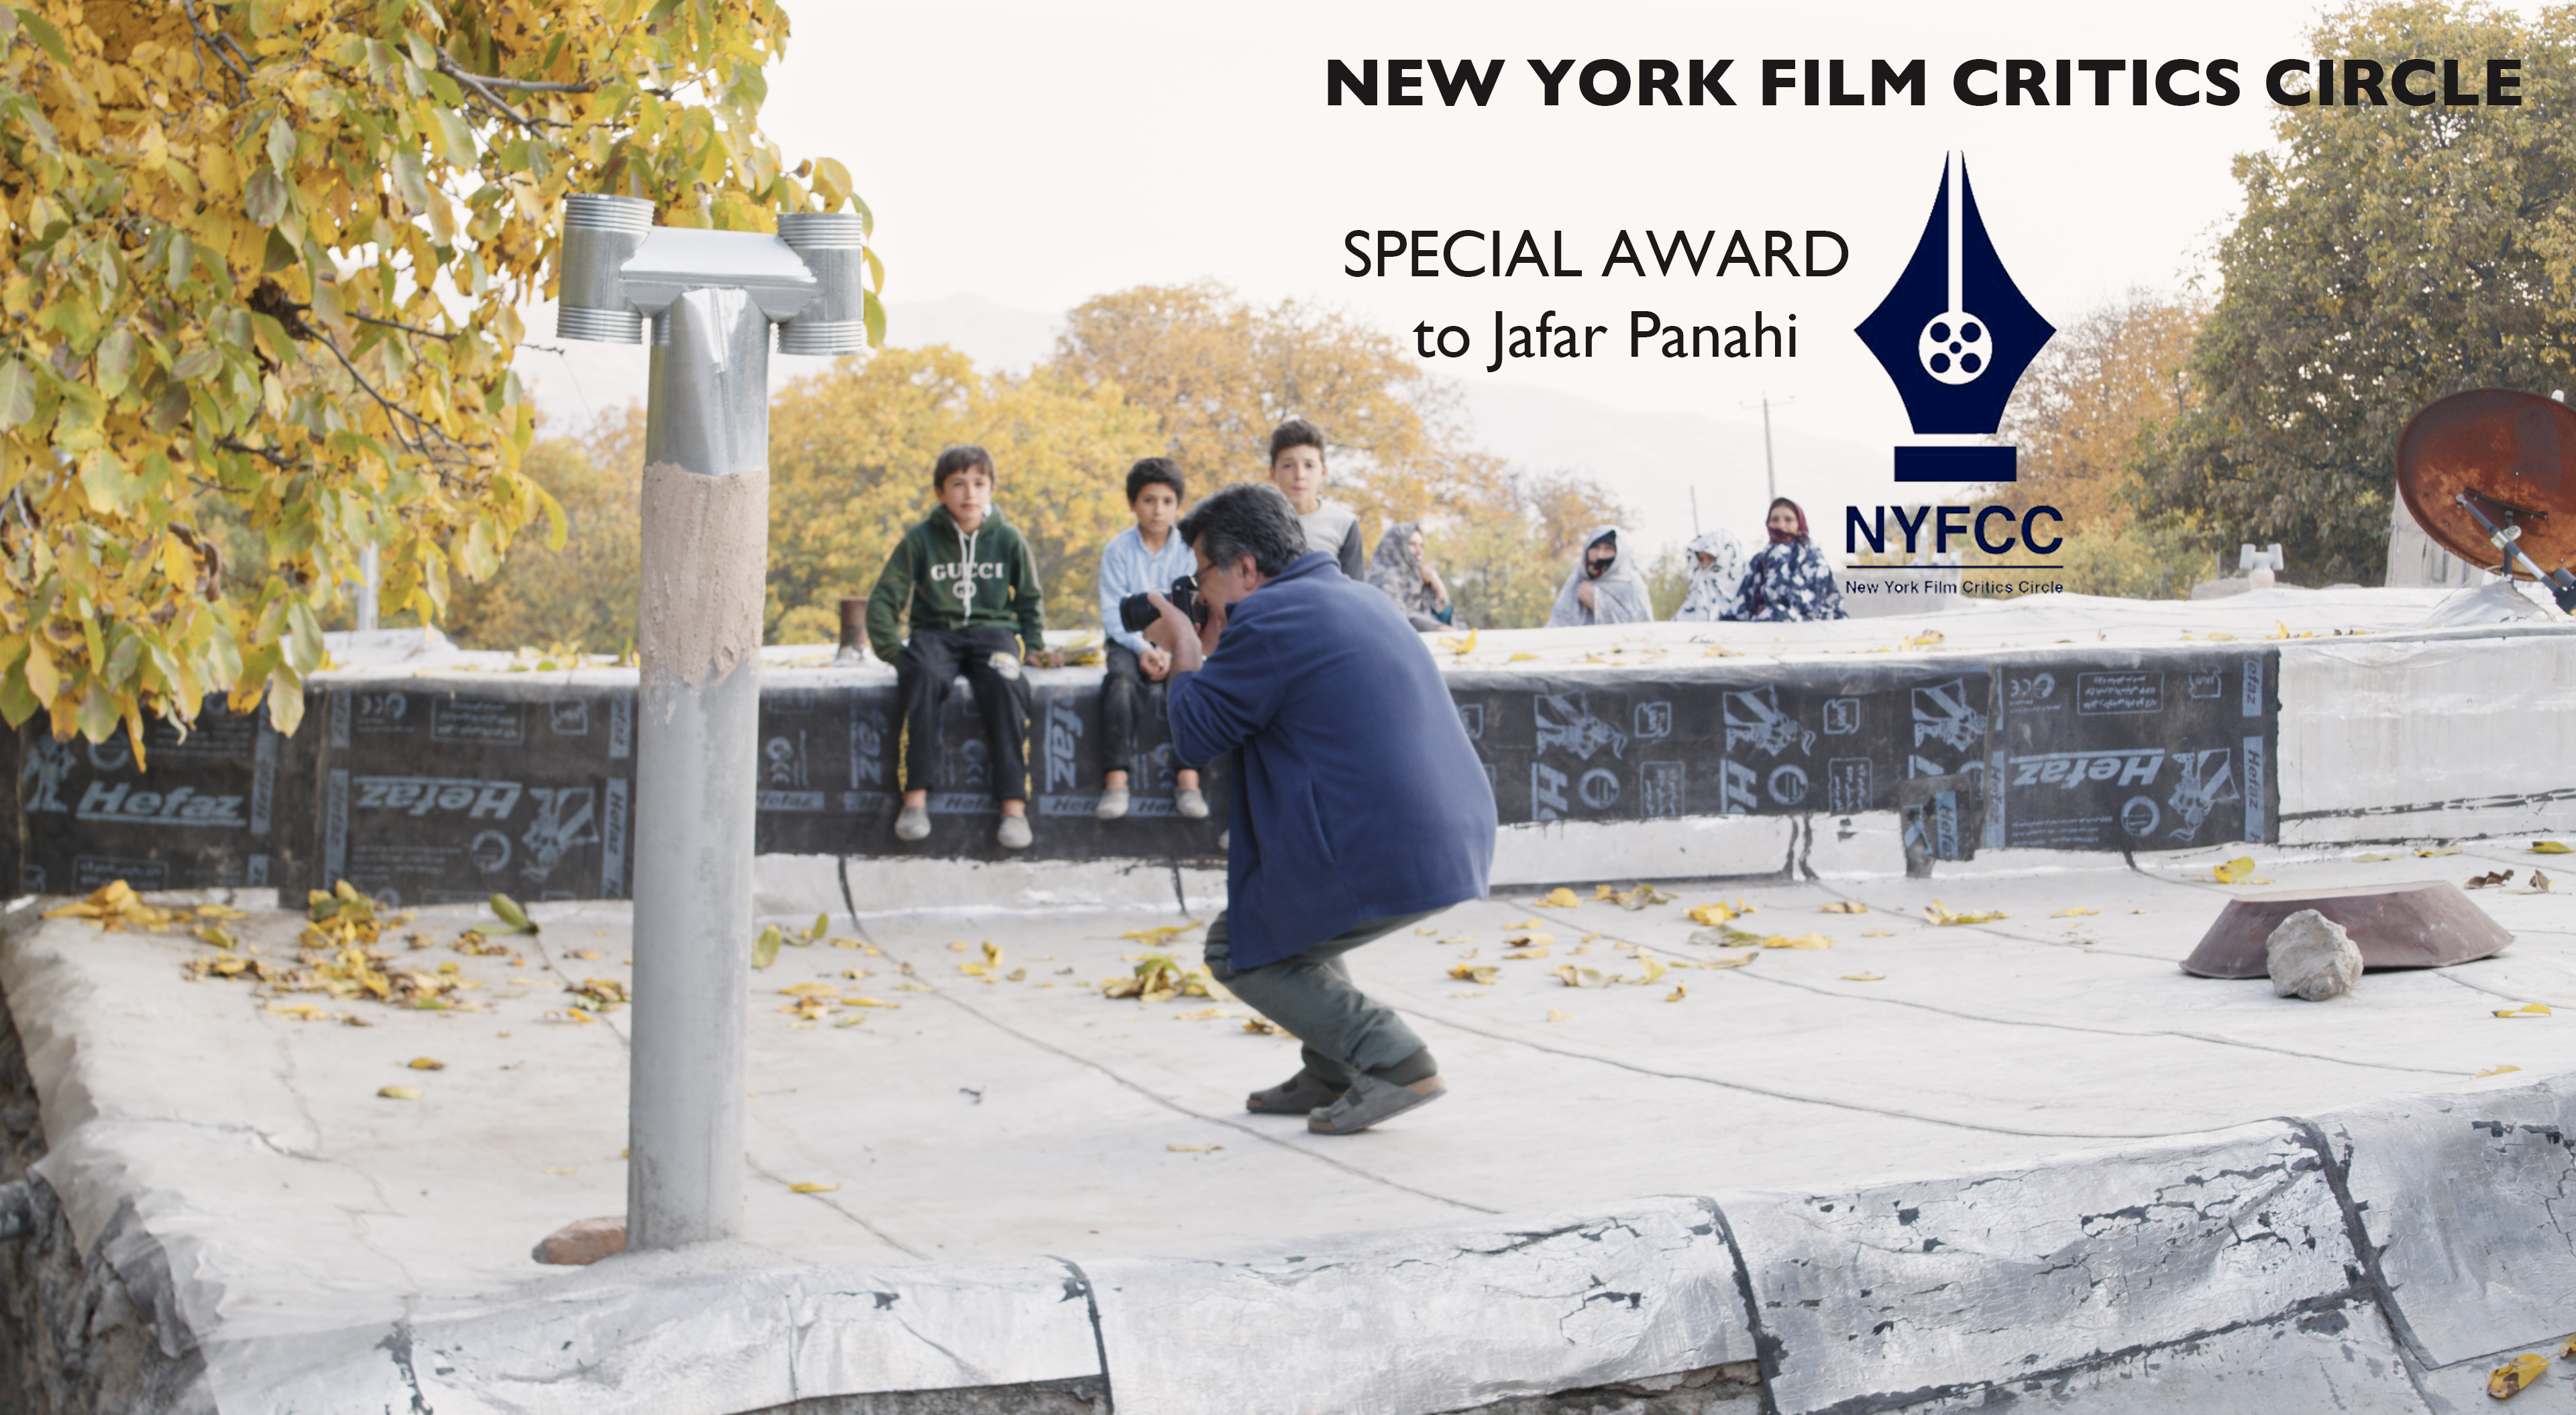 NO BEARS received Special Award at the New York Film Critics Circle